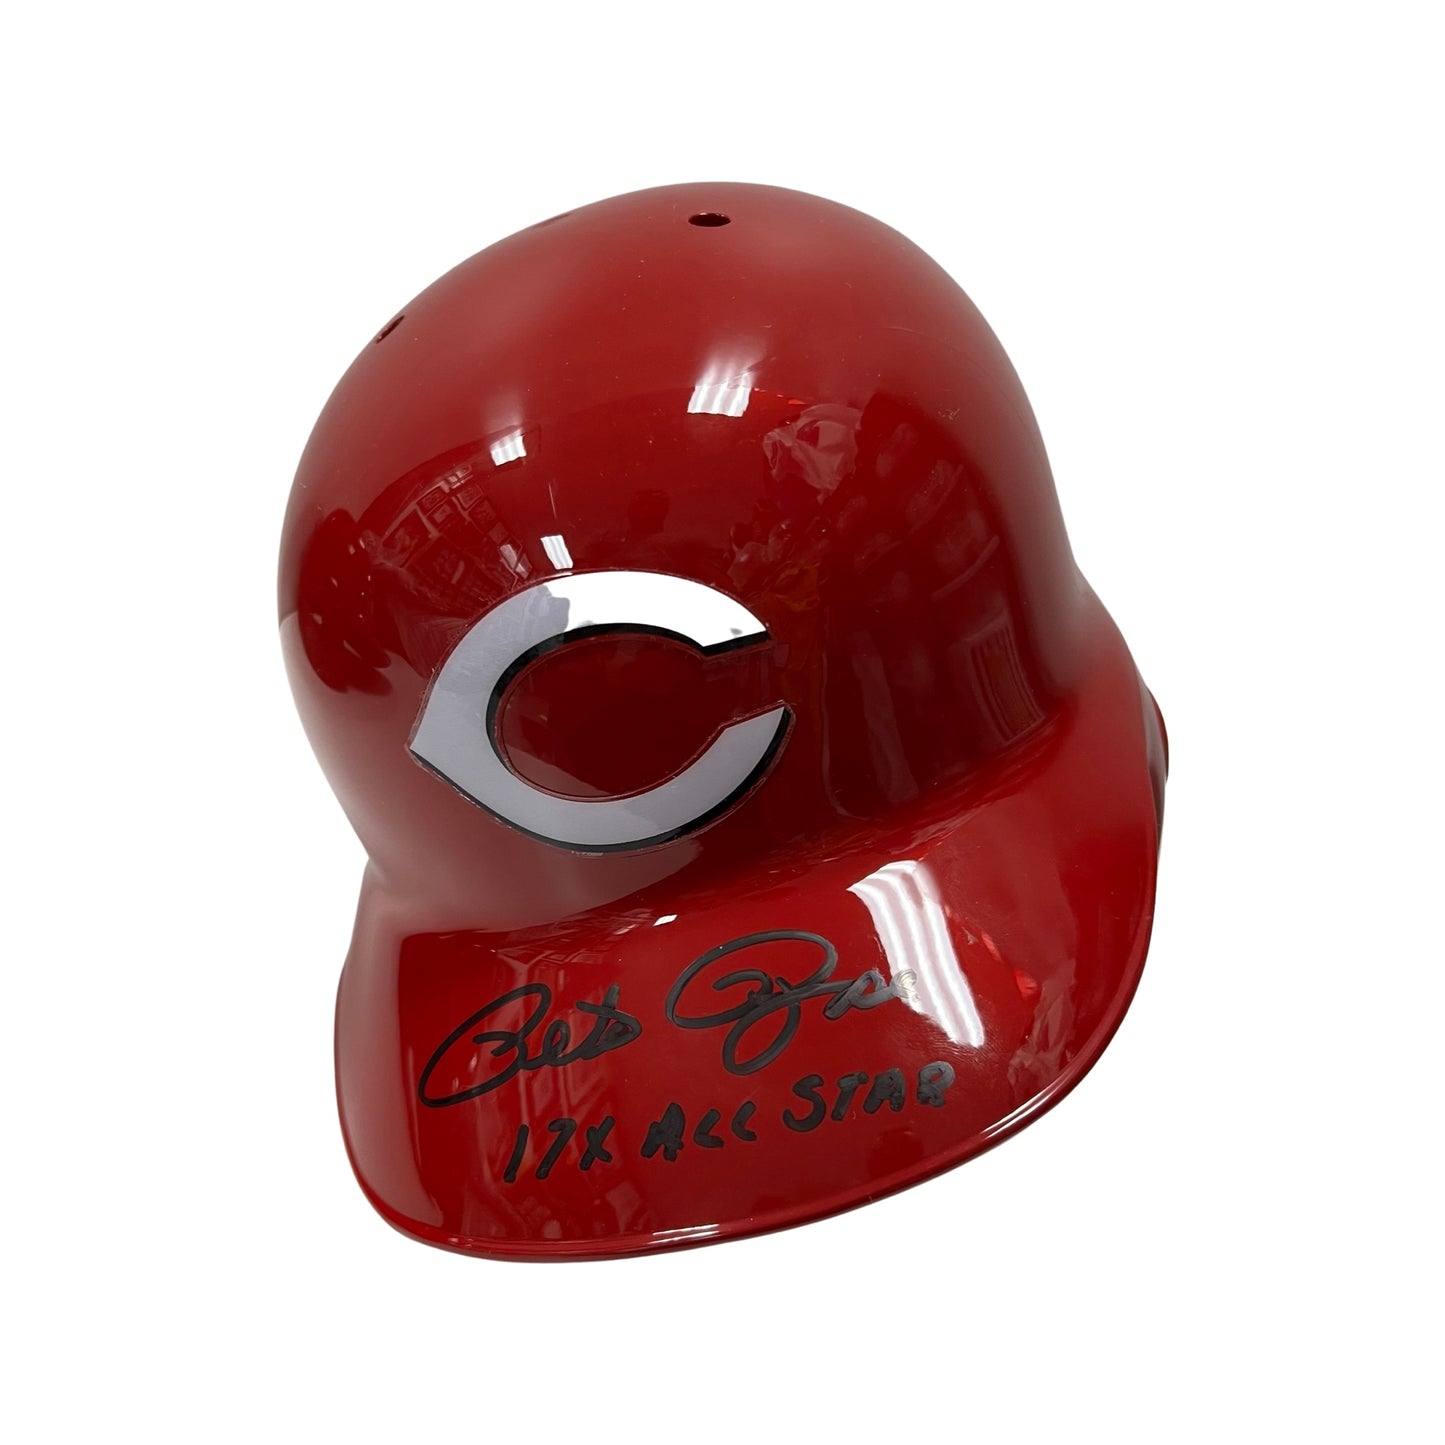 Pete Rose Autographed Cincinnati Reds Batting Helmet “17x All Star” Inscription Steiner CX